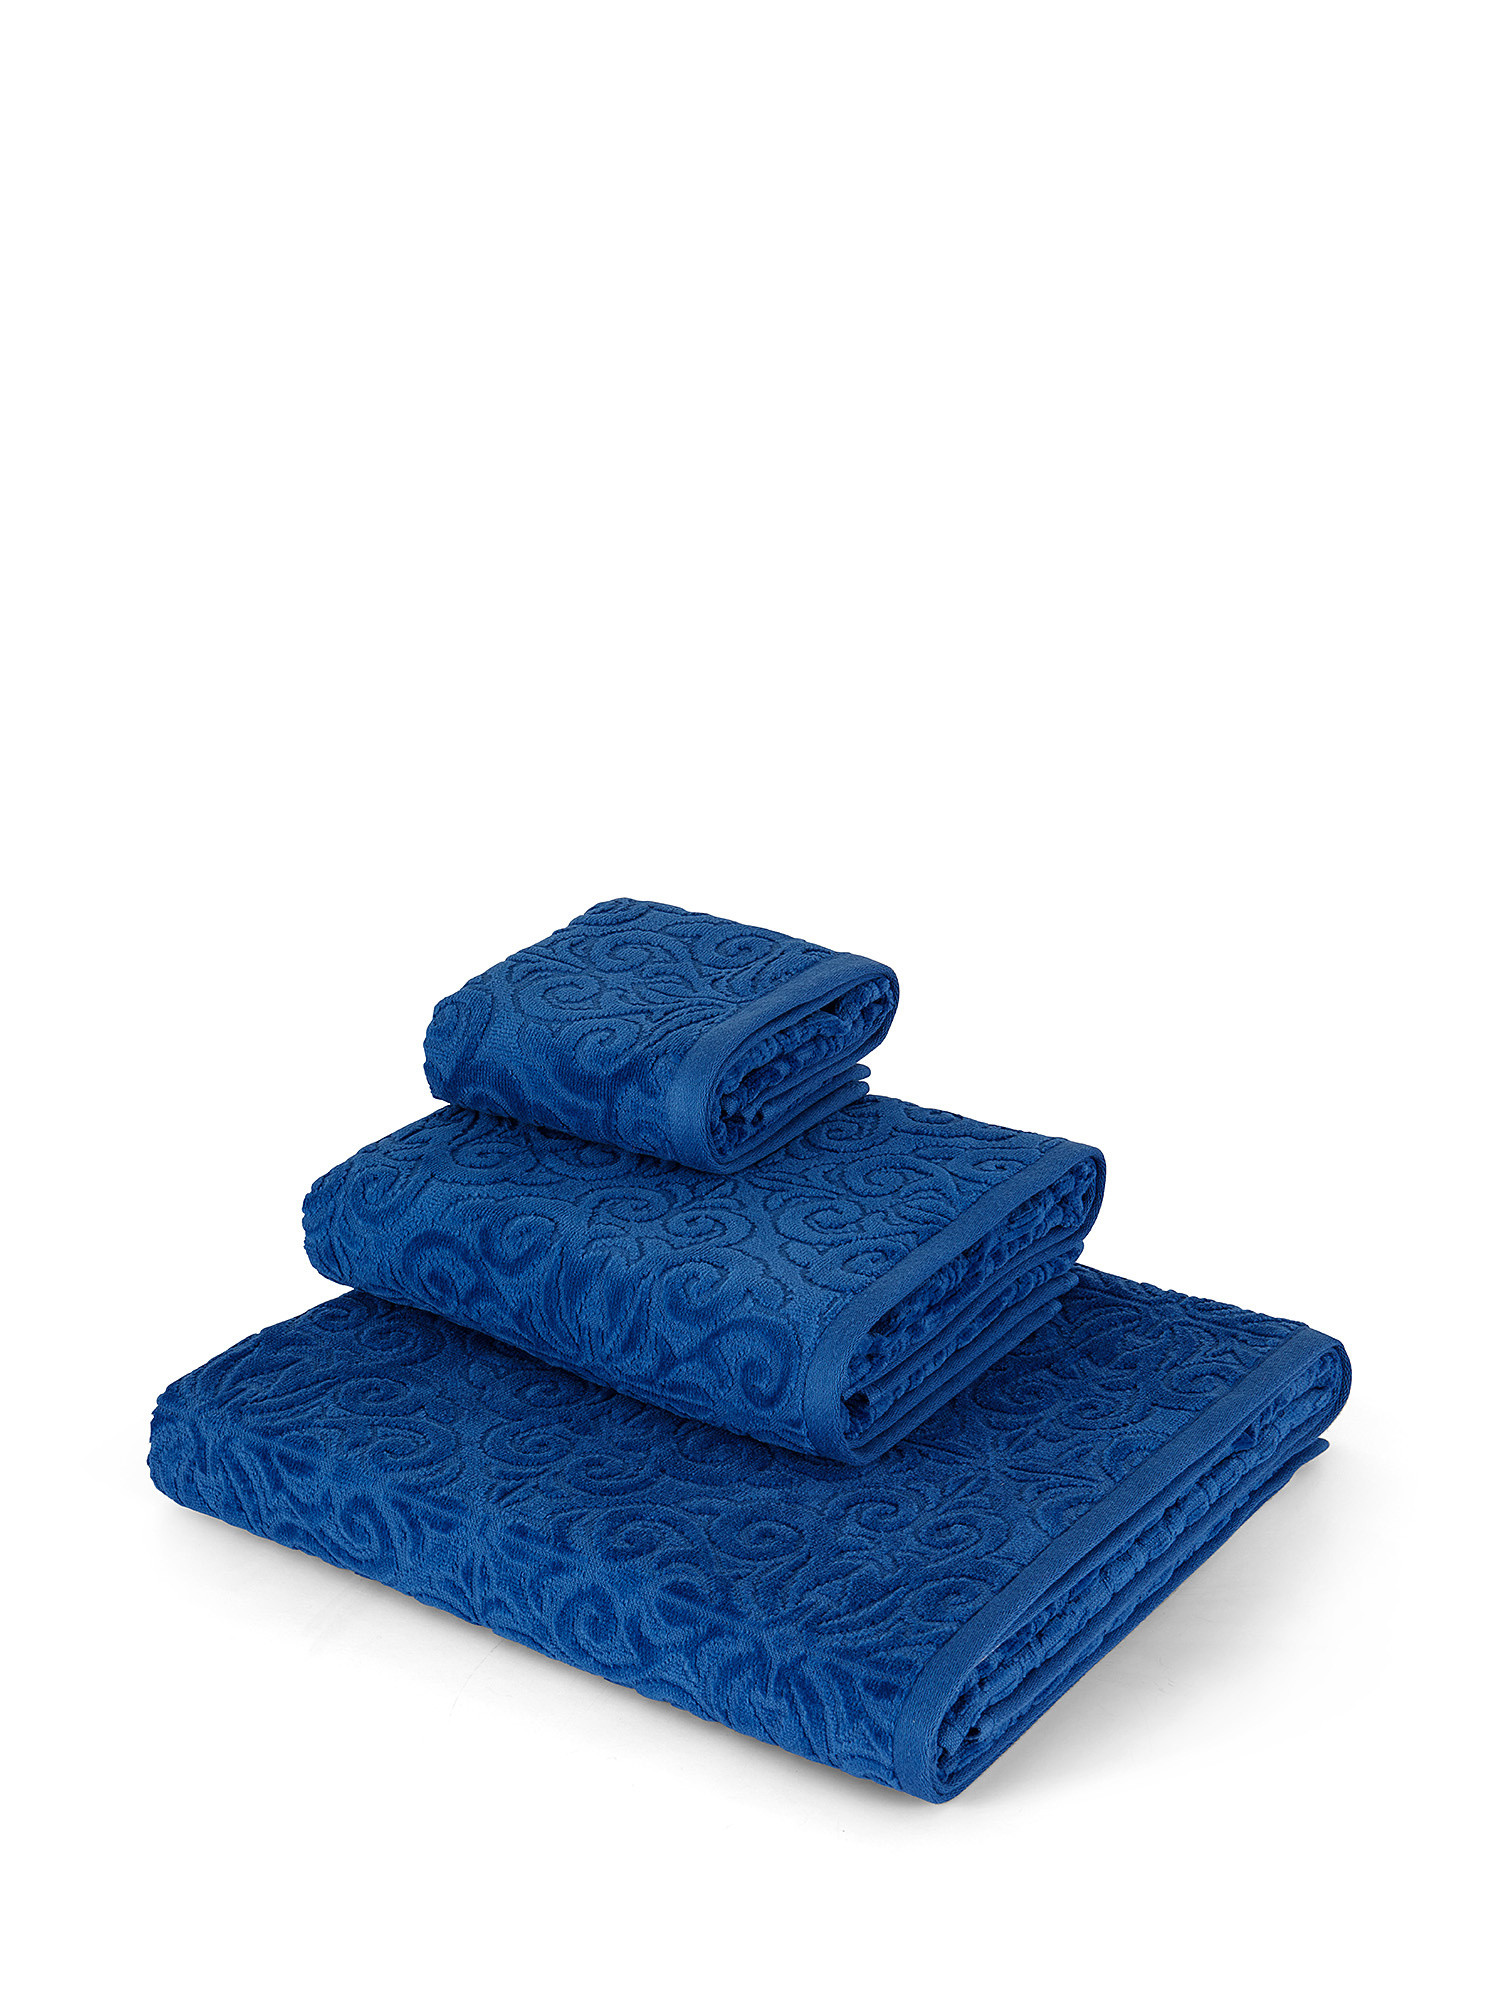 Asciugamano cotone velour motivo azulejos, Blu, large image number 0